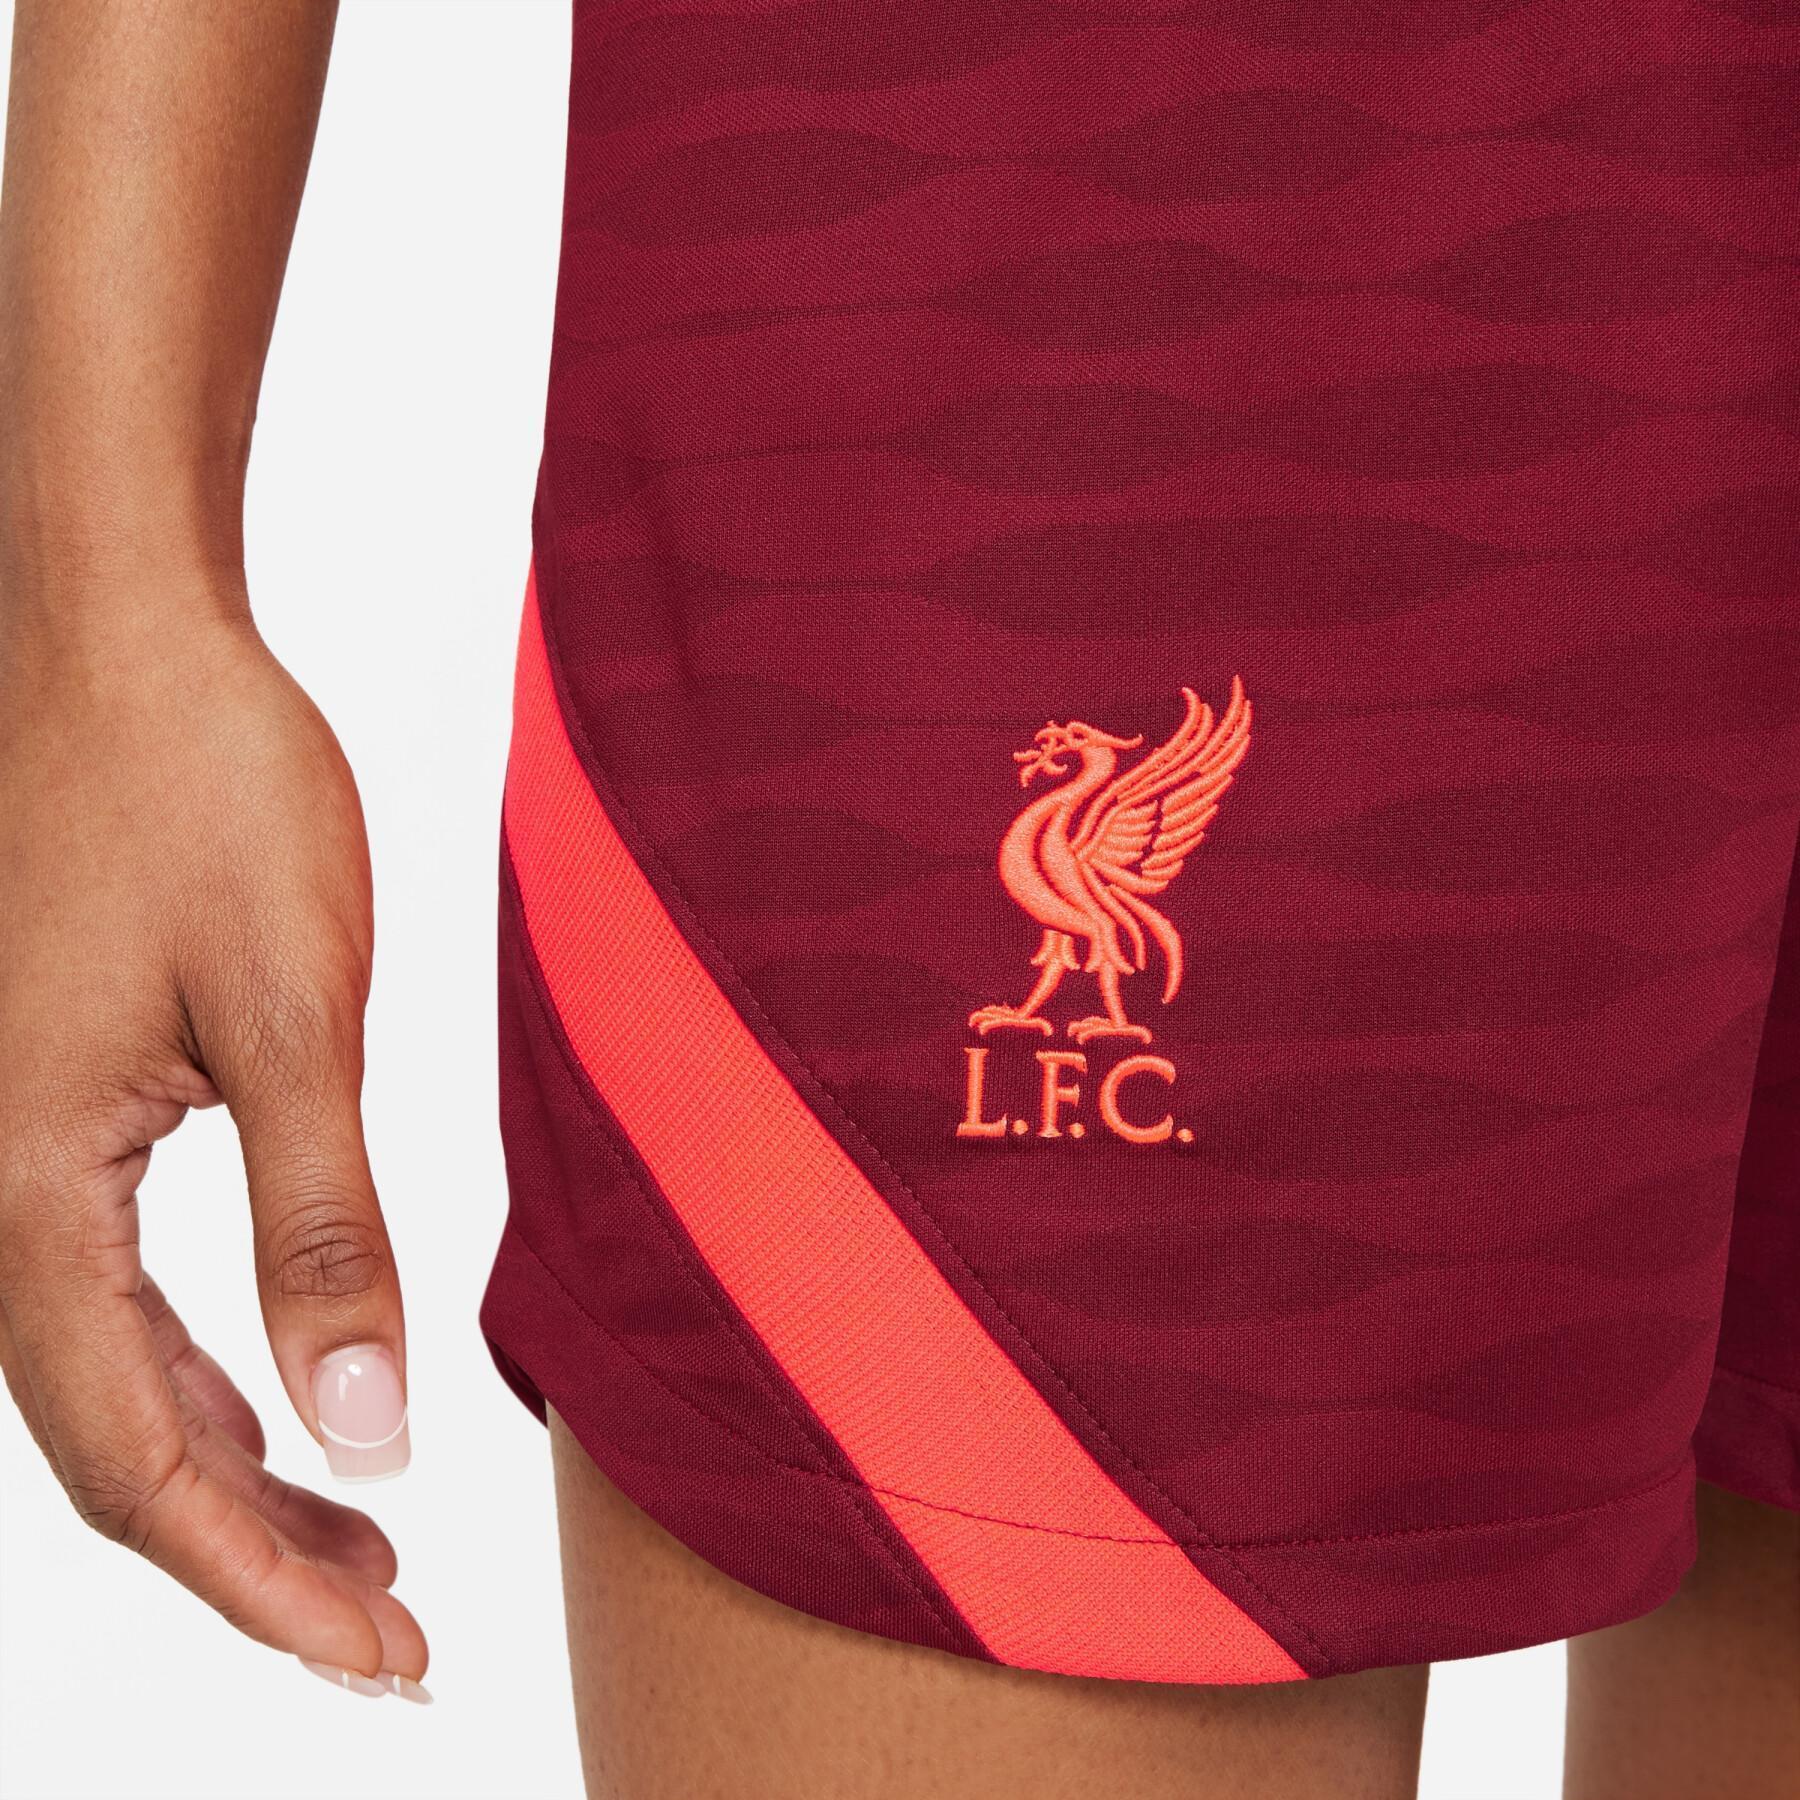 Women's shorts Liverpool FC Dynamic Fit Strike 2021/22